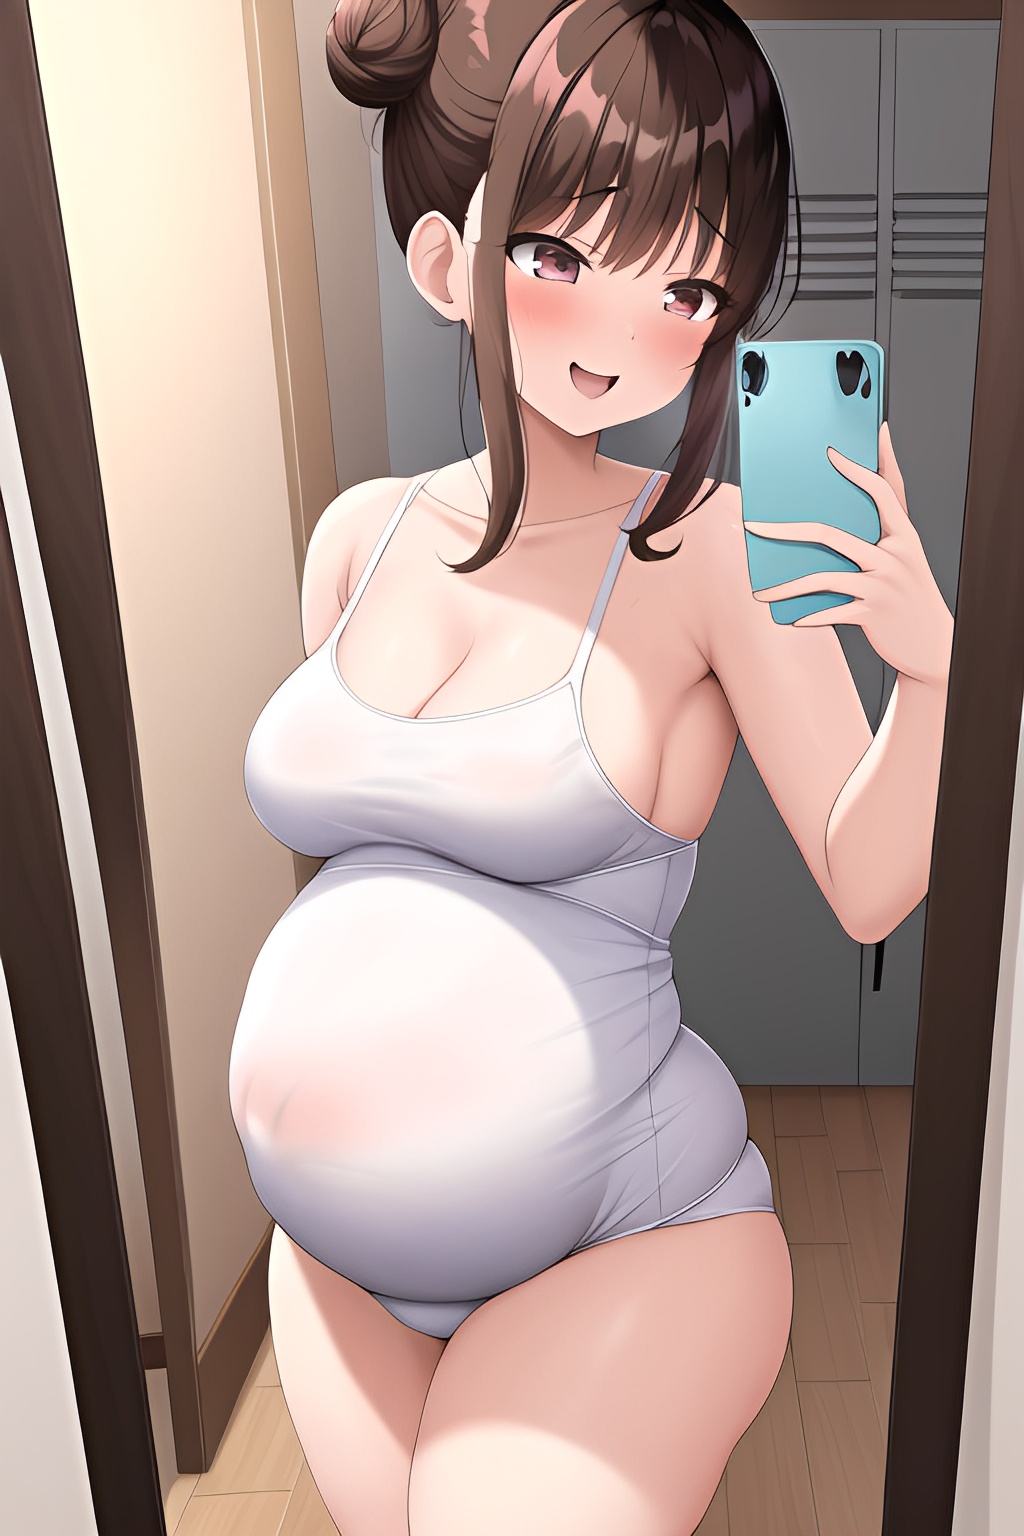 Anime Pregnant Small Tits 40s Age Laughing Face Brunette Hair Bun Hair